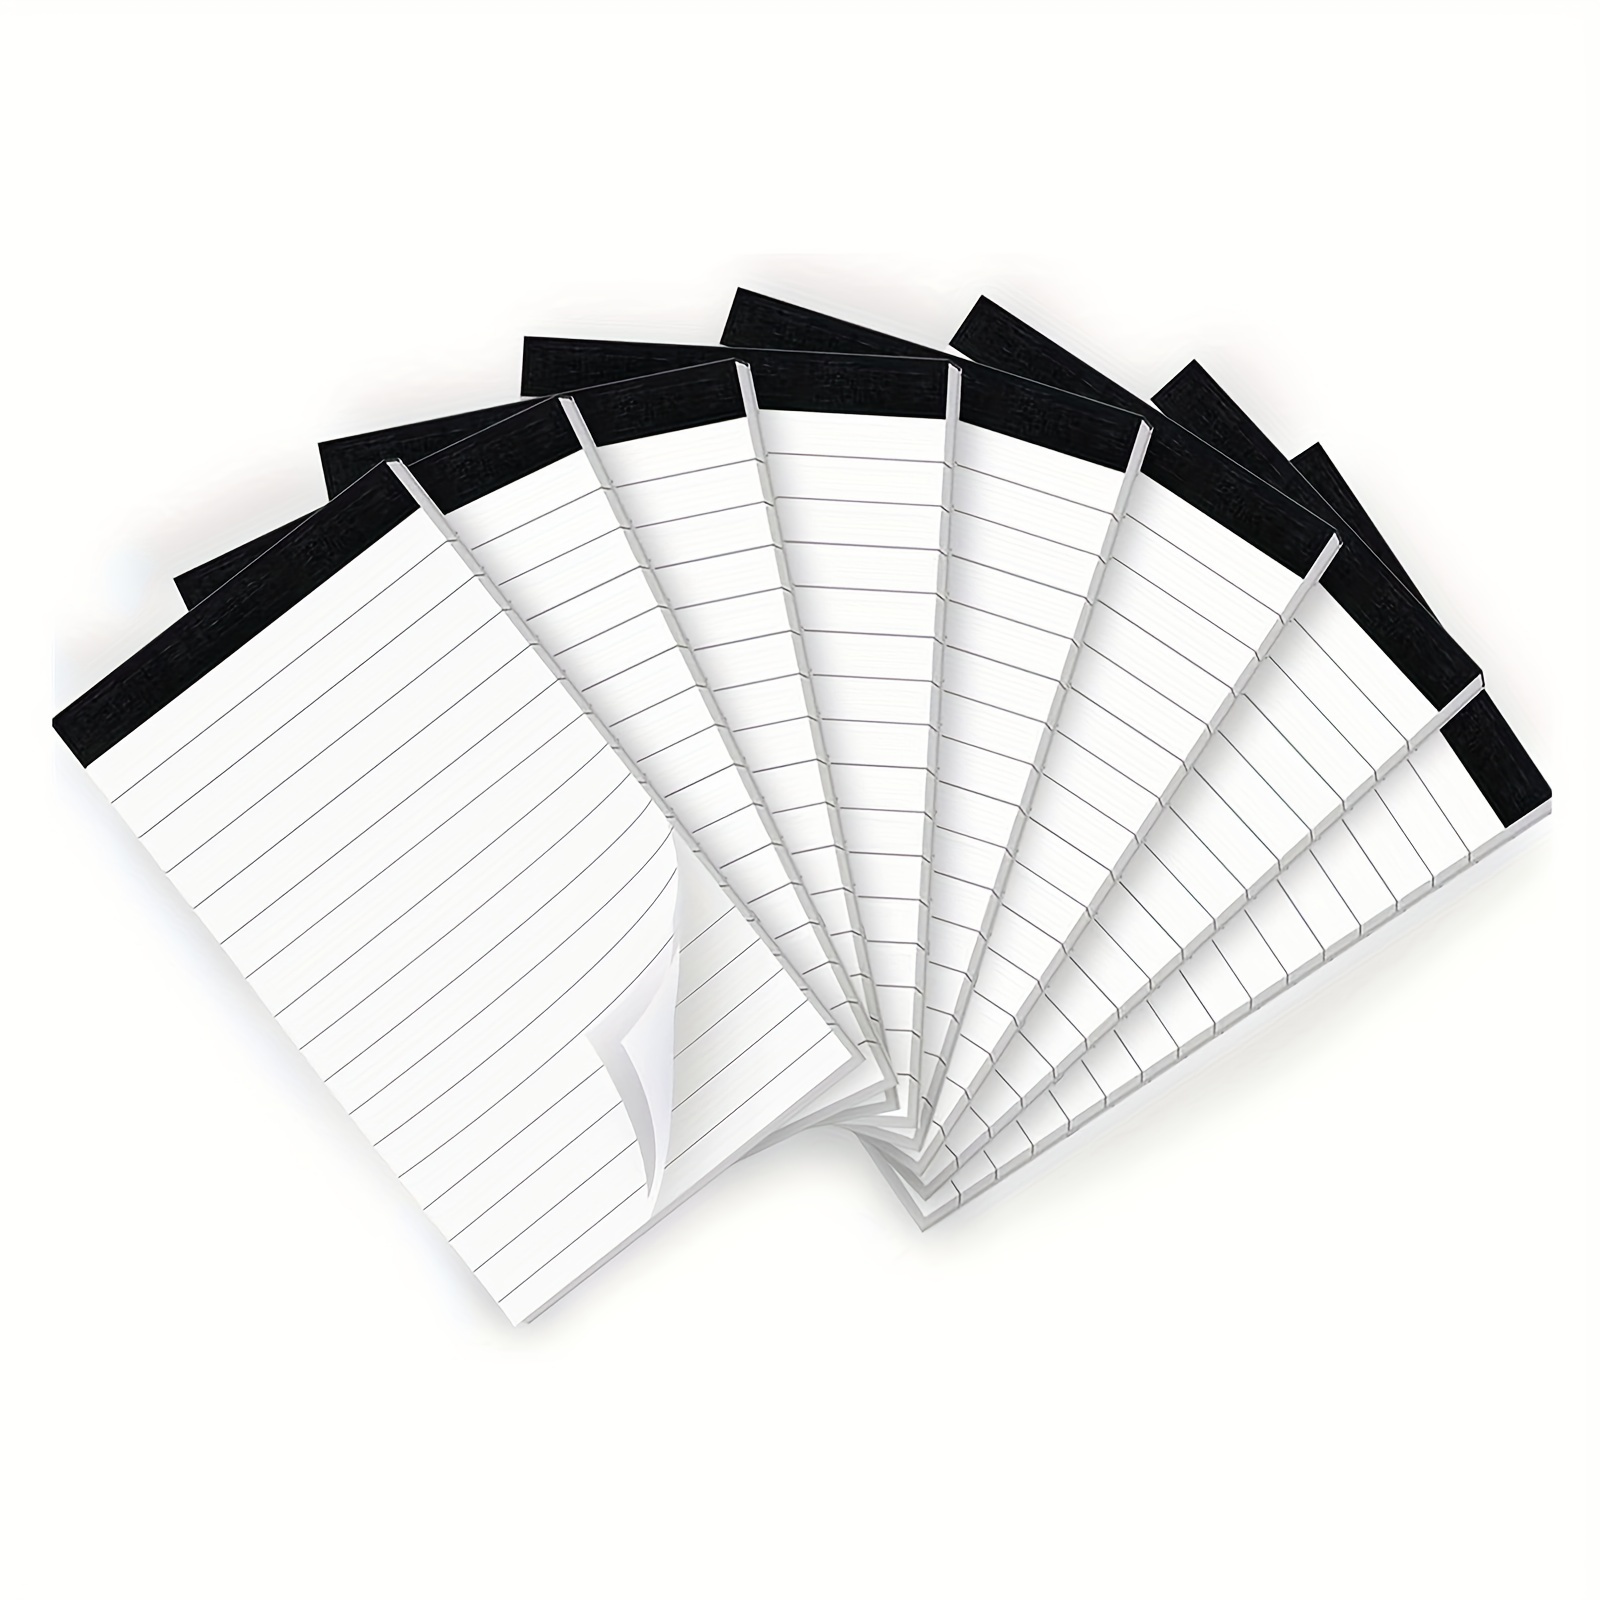 Scratch Pad, 3 x 5, 50 Sheets per Pack, 4 Packs, White